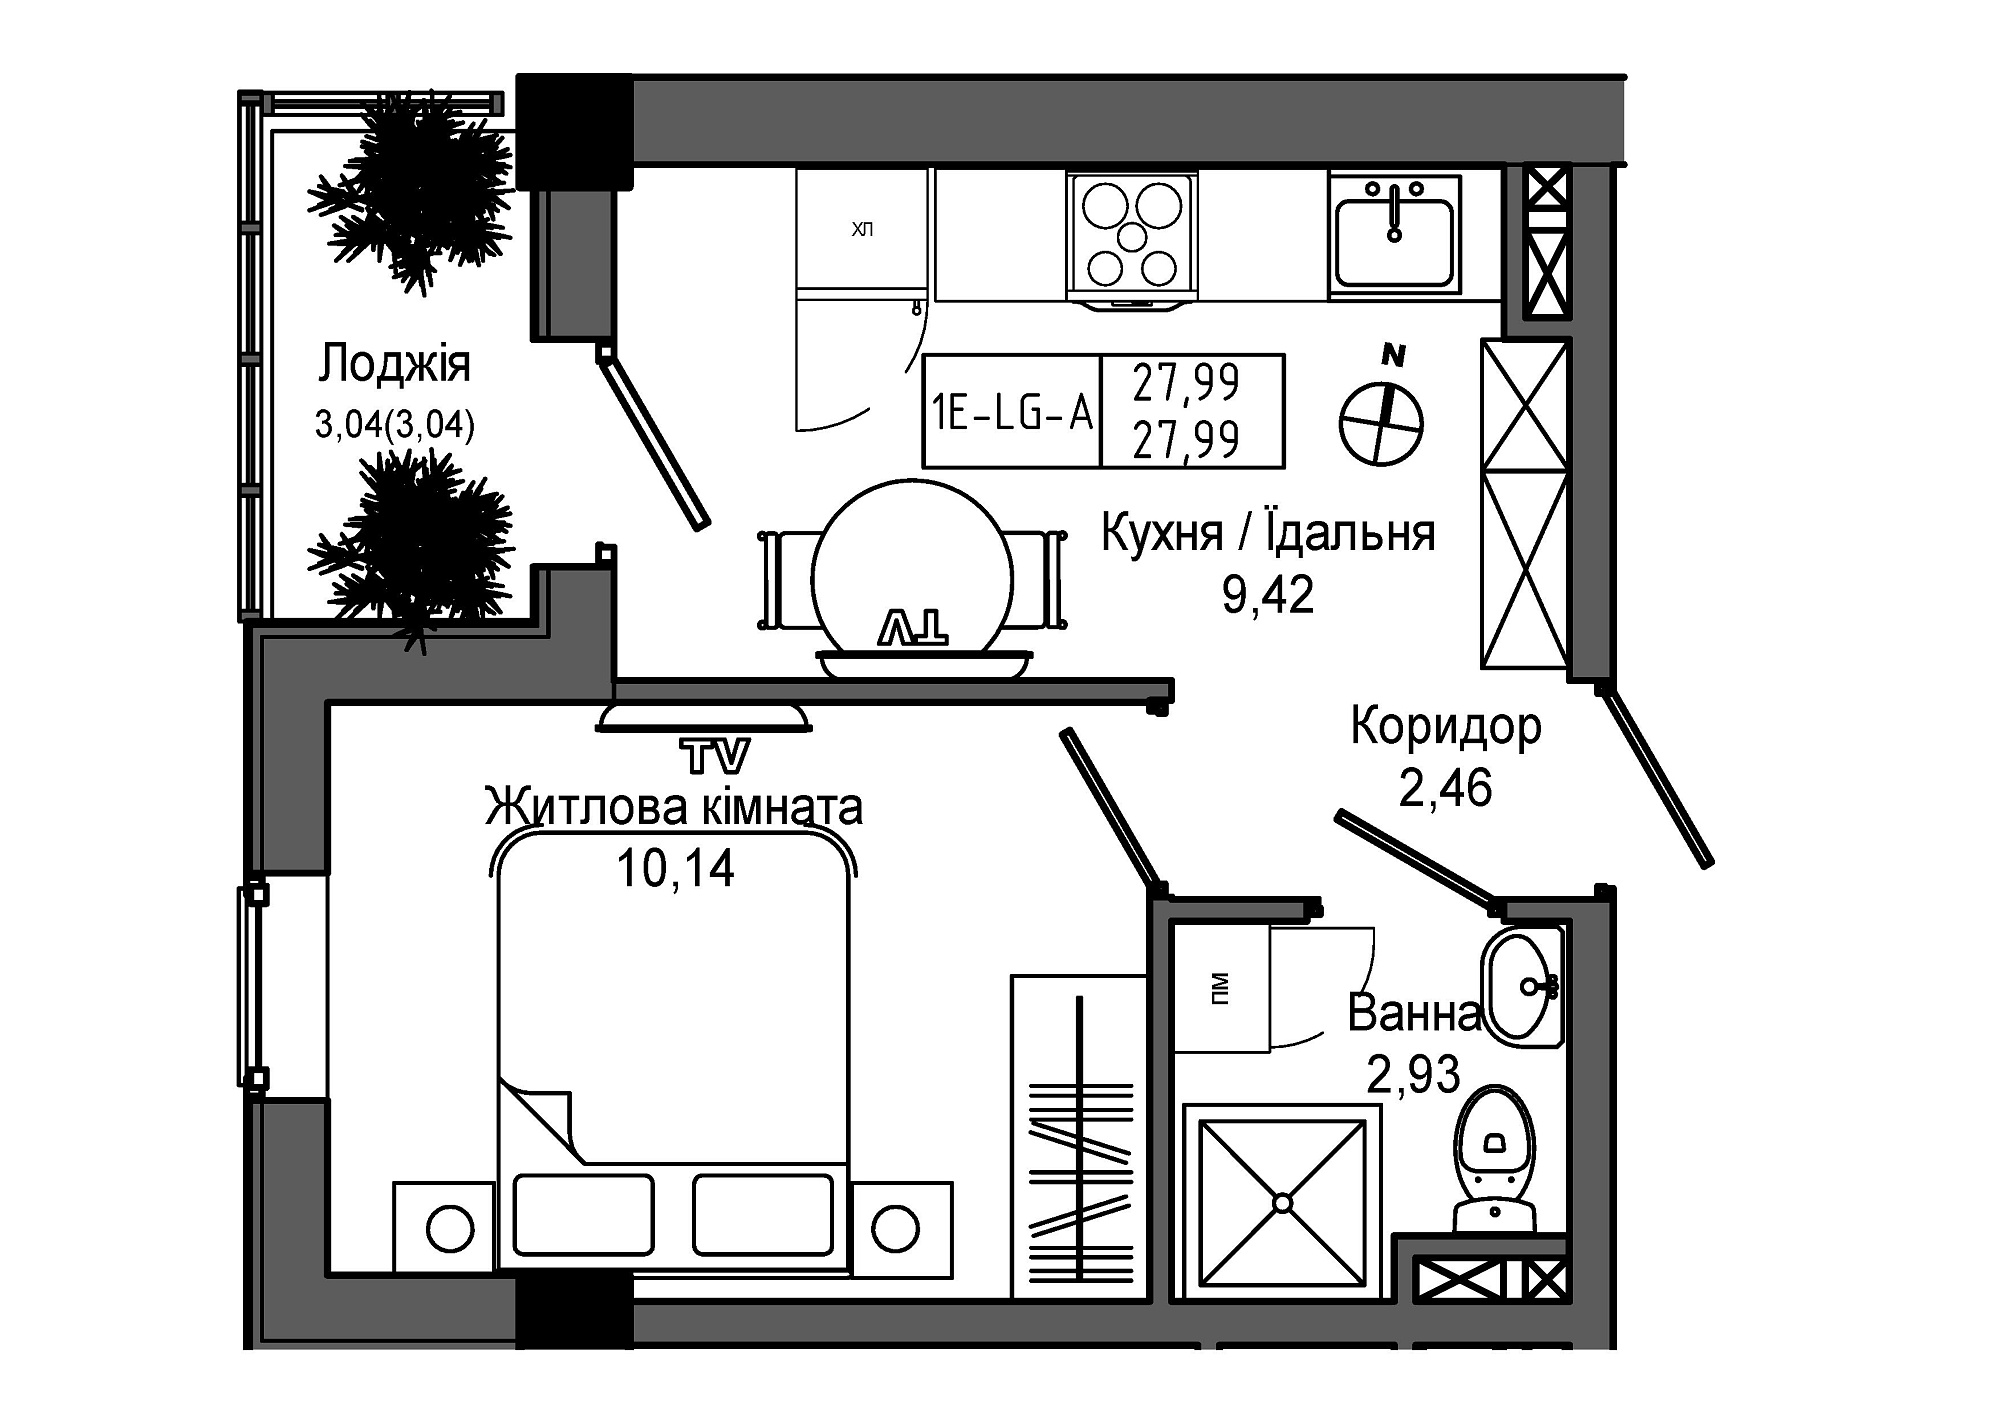 Планування 1-к квартира площею 27.99м2, UM-006-00/0012.